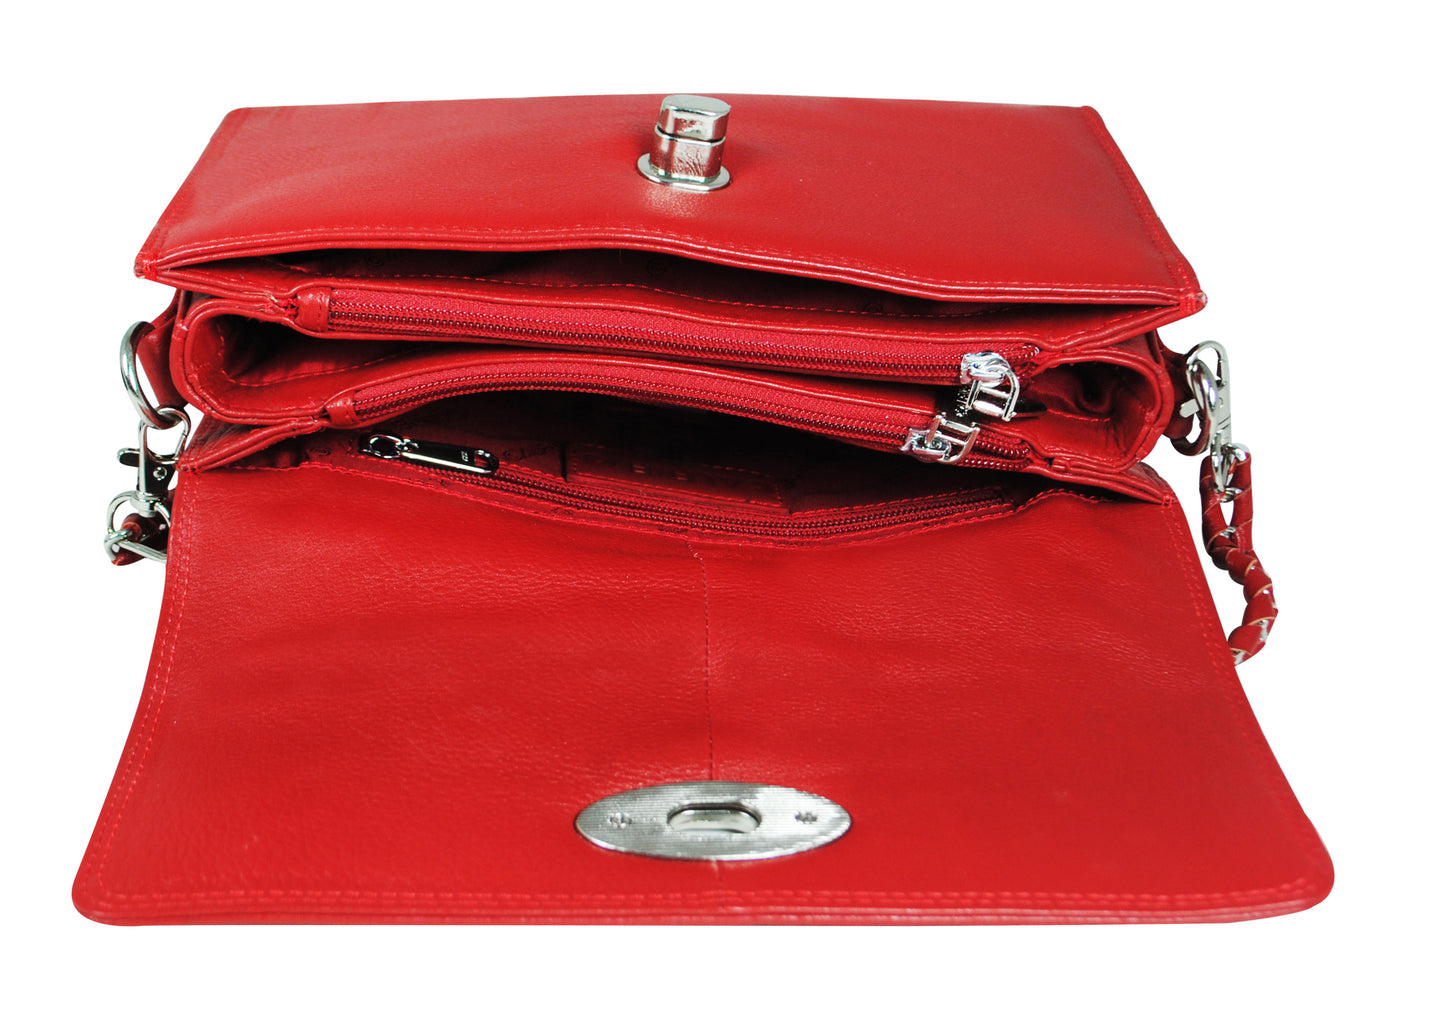 Calfnero Genuine Leather Women's Sling Bag (102-Red)